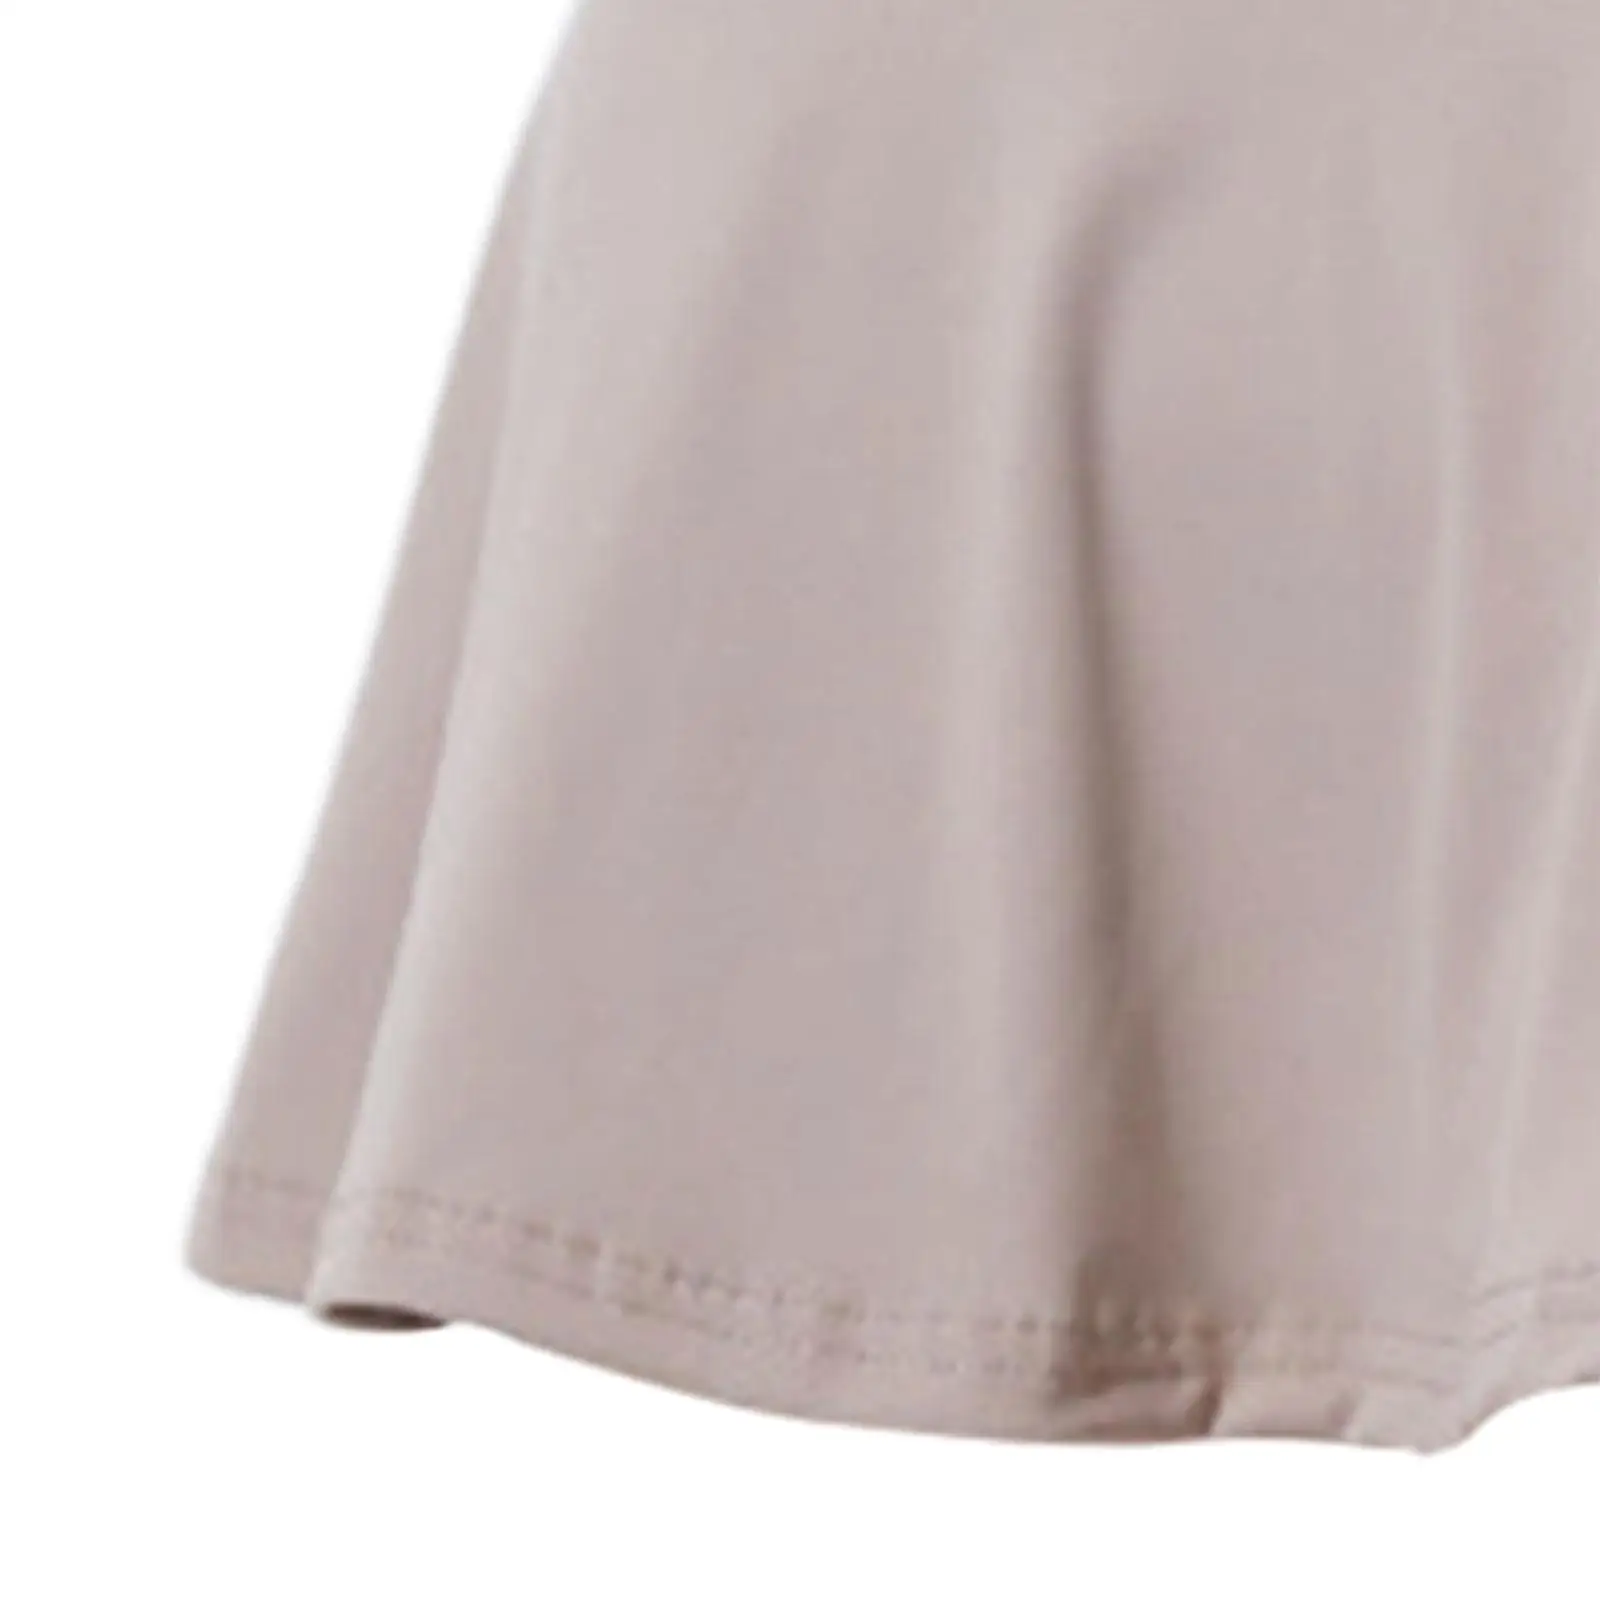 Tennis Skirt Short Skirts Gymwear High Waisted Anti Exposure Athletic Clothing Badminton Skirts for Golf Yoga Workout Sport